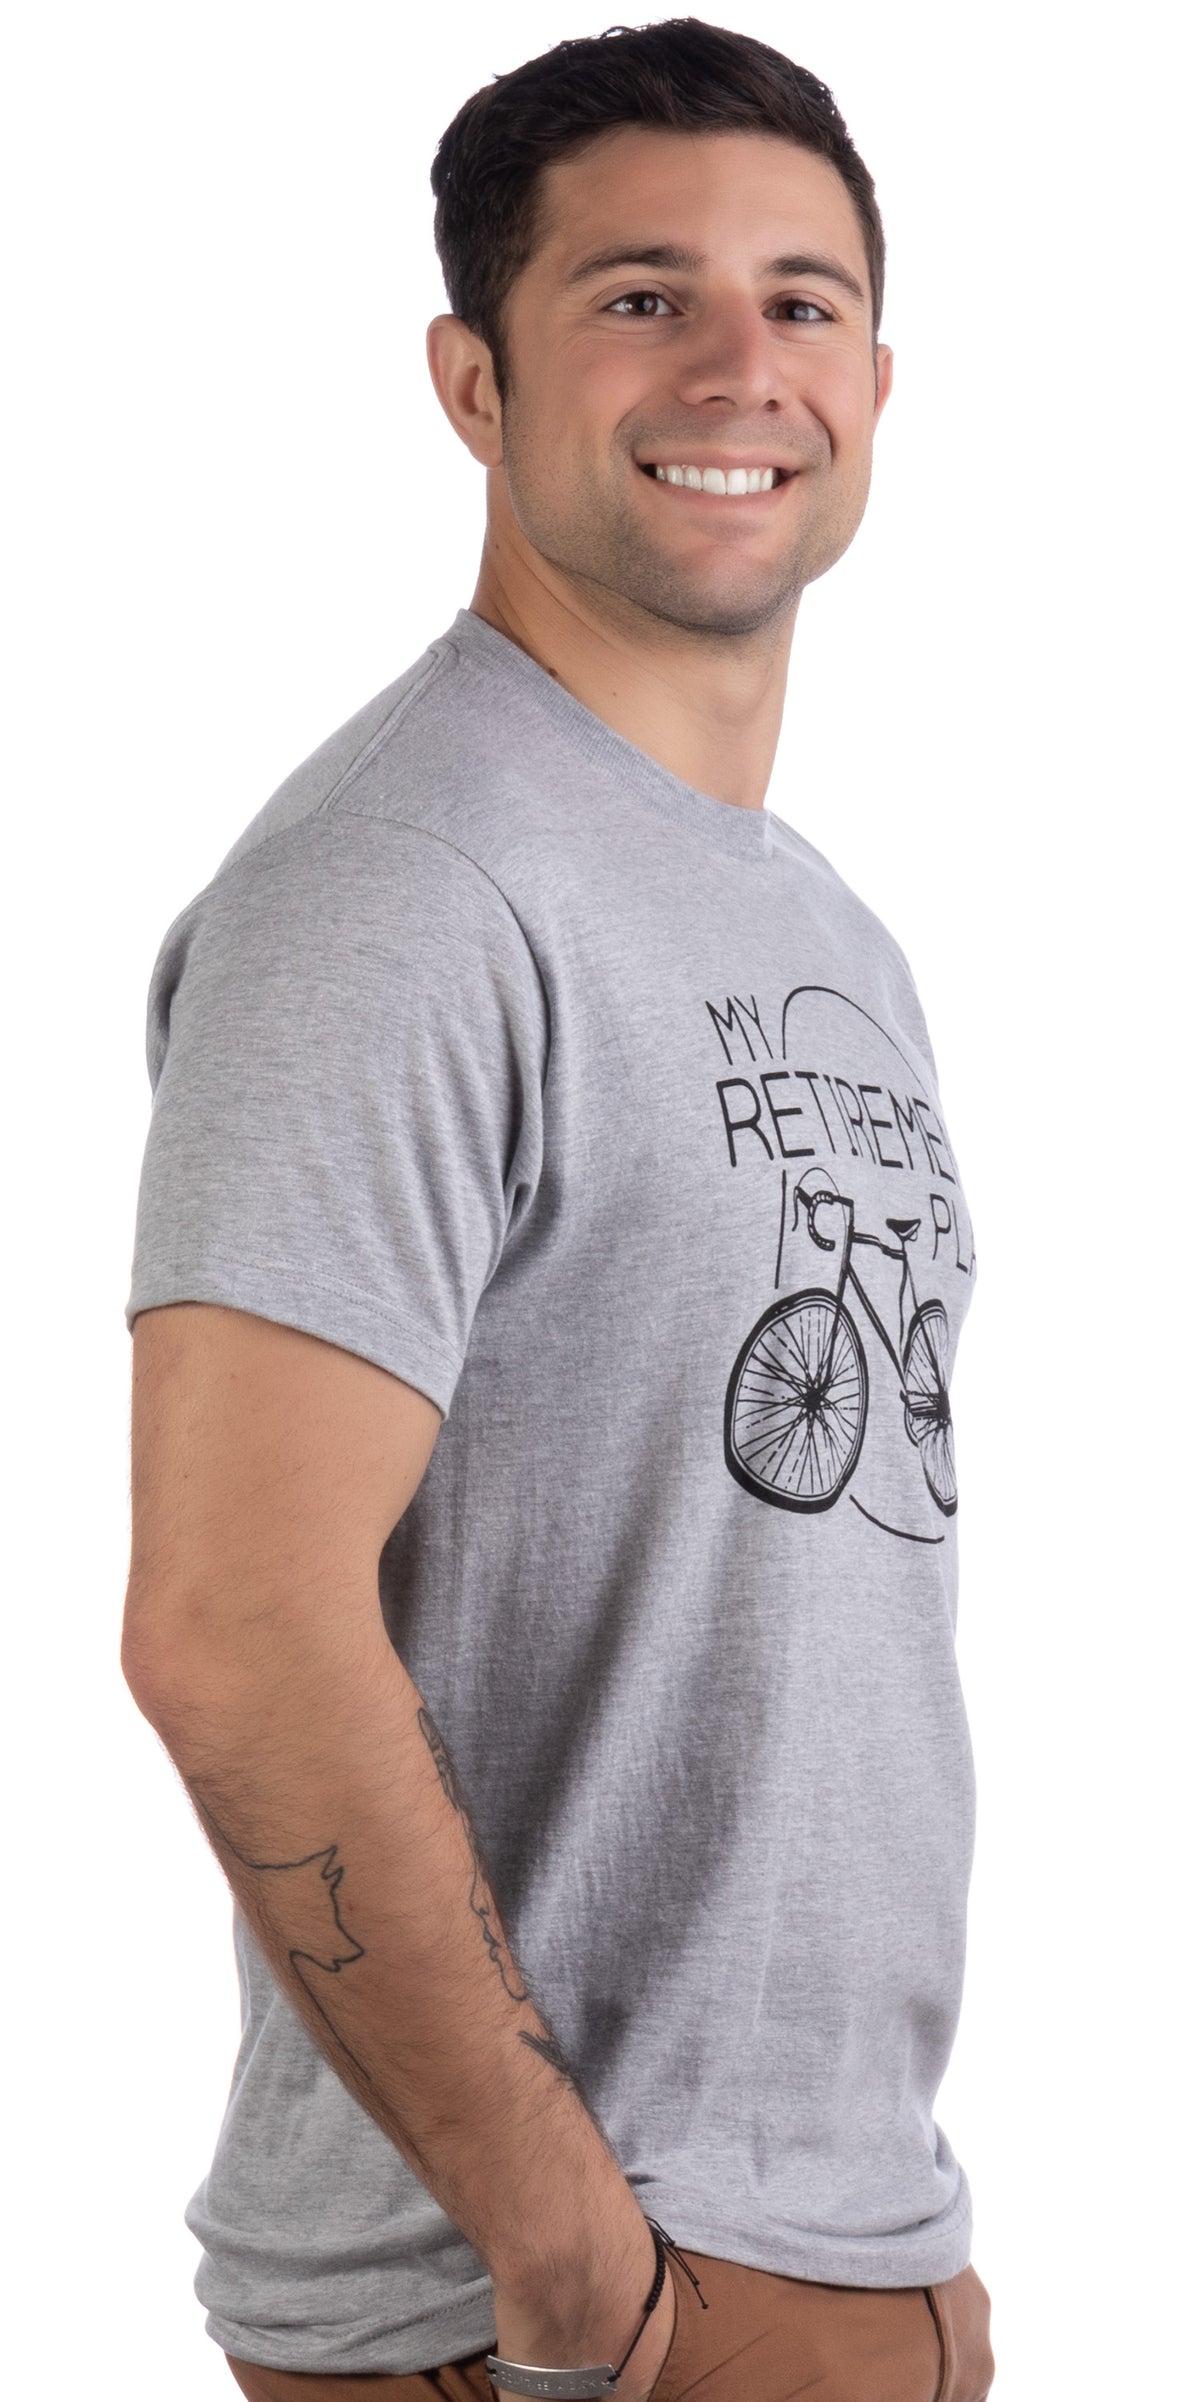 My Retirement Plan (Bicycle) - Funny Bike Riding Rider Cyclist Man T-shirt